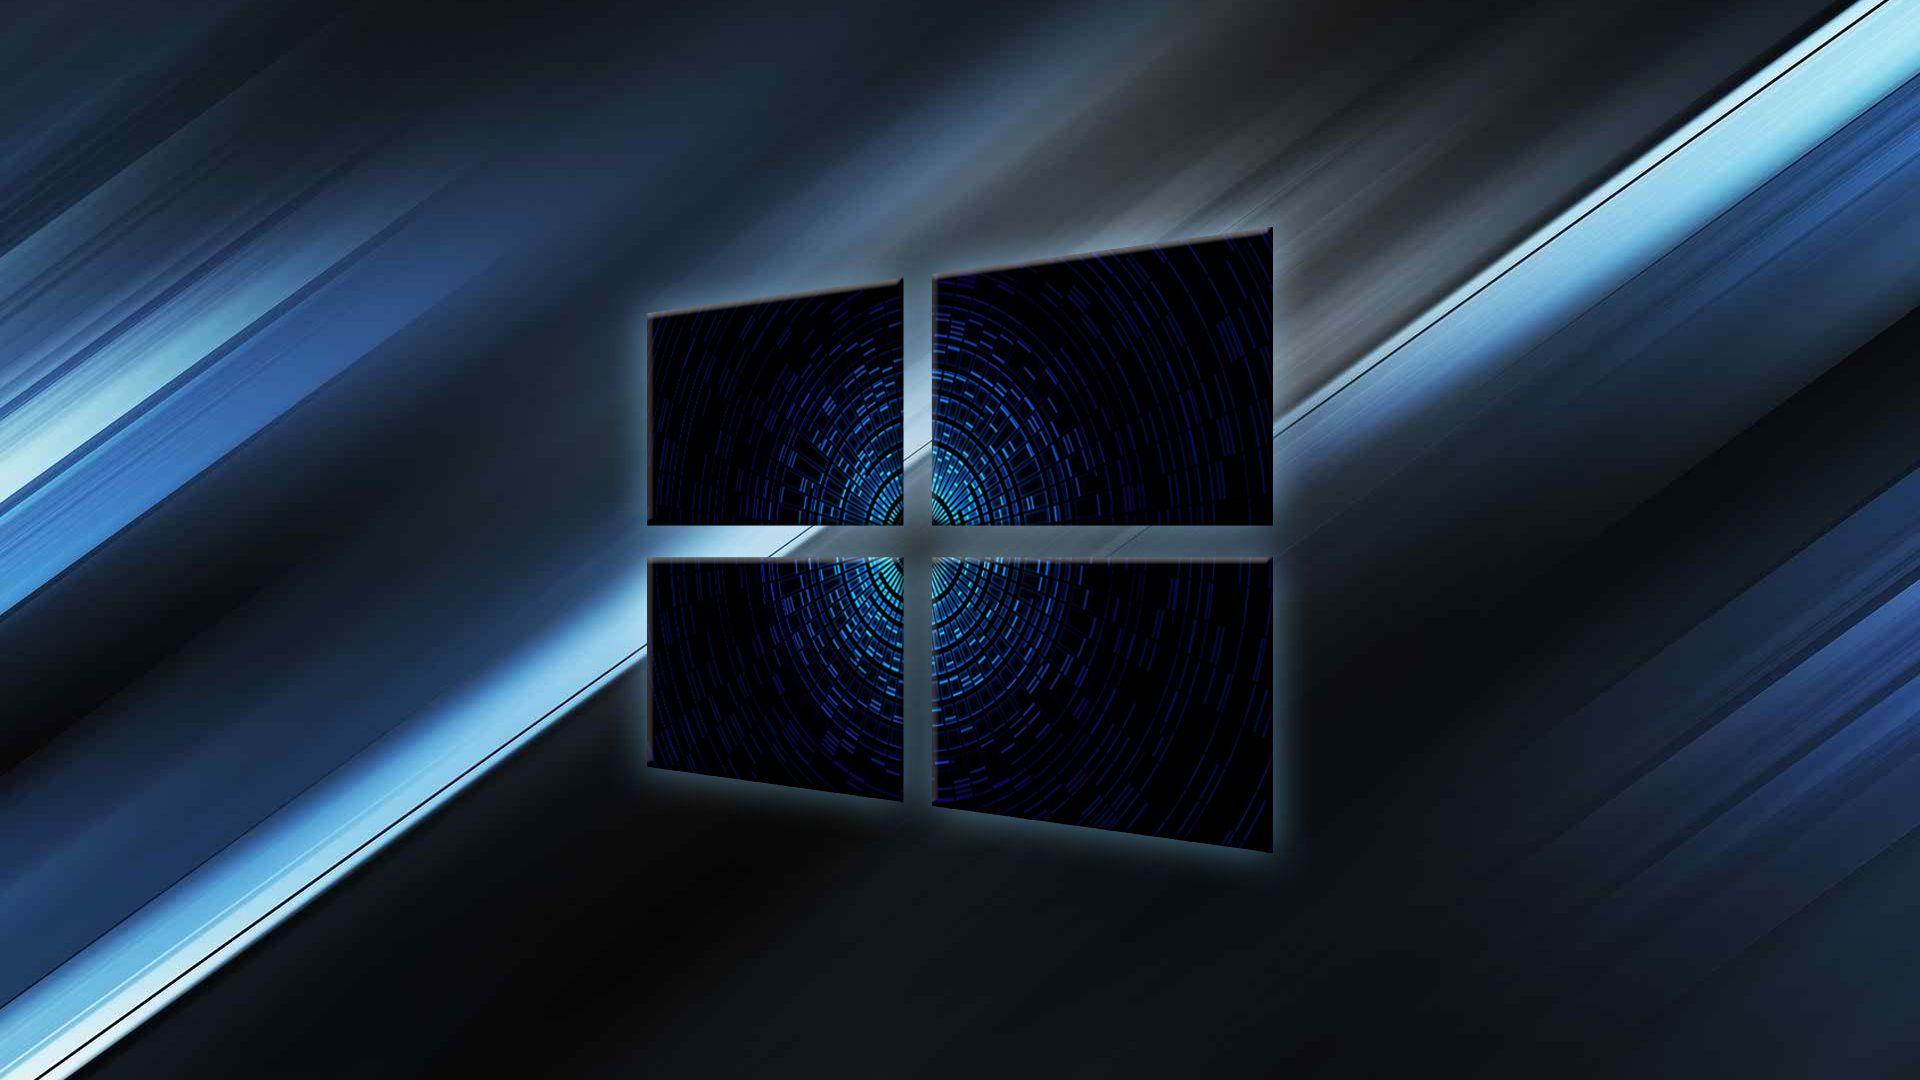 HD windows 10 logo wallpaper